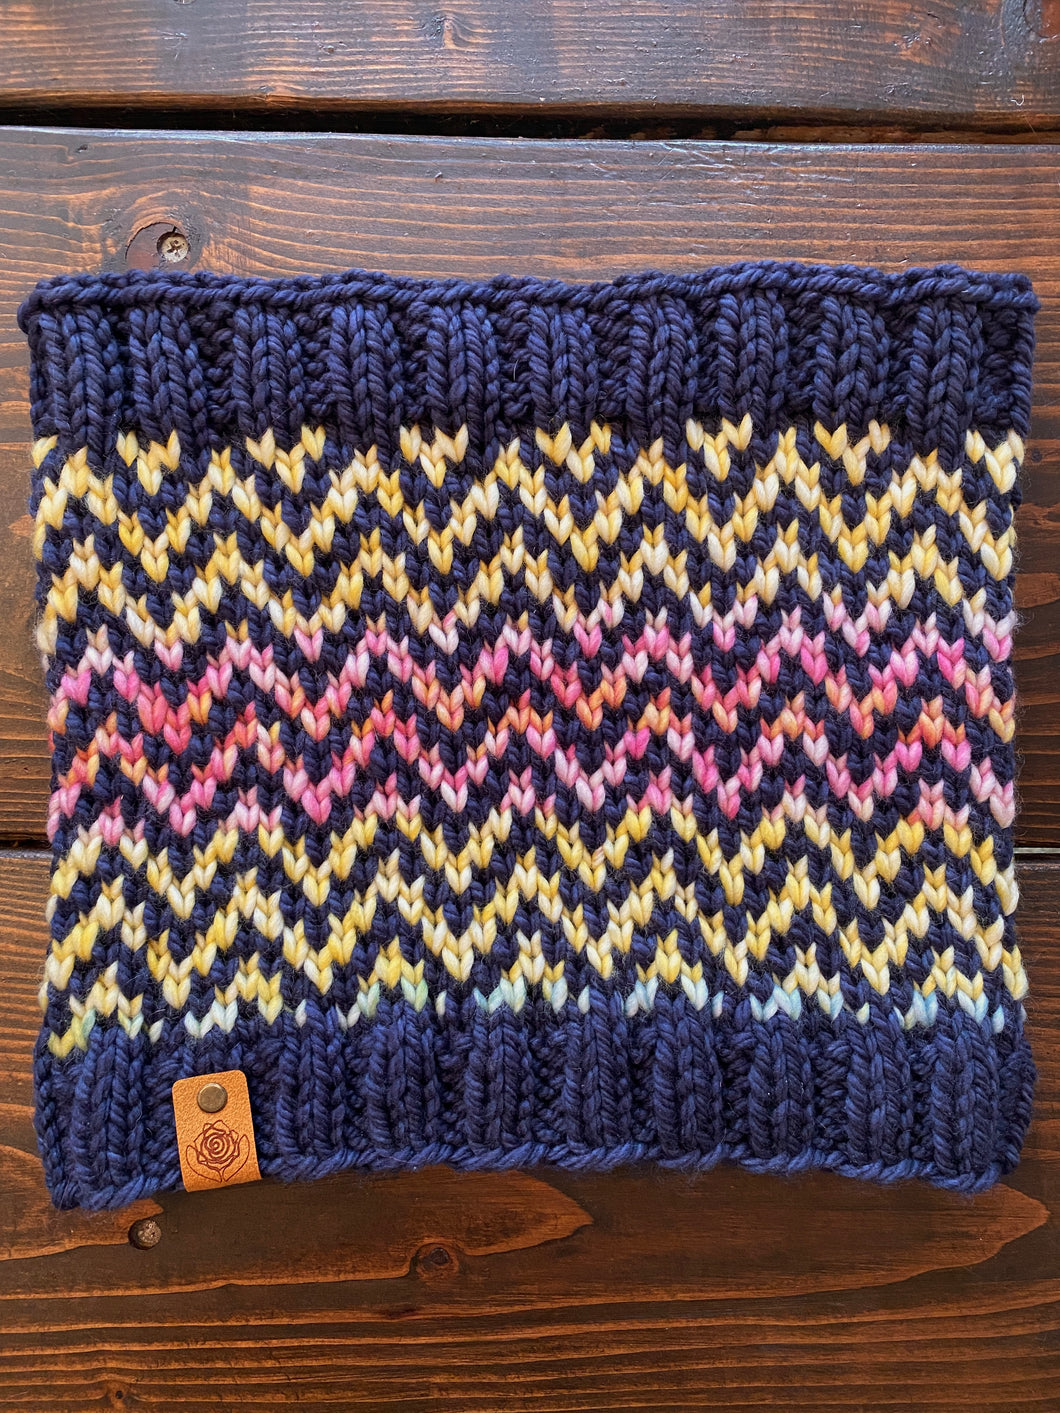 Luxury women's hand knit chevron winter cowl pink blue navy yellow wool slow fashion gift